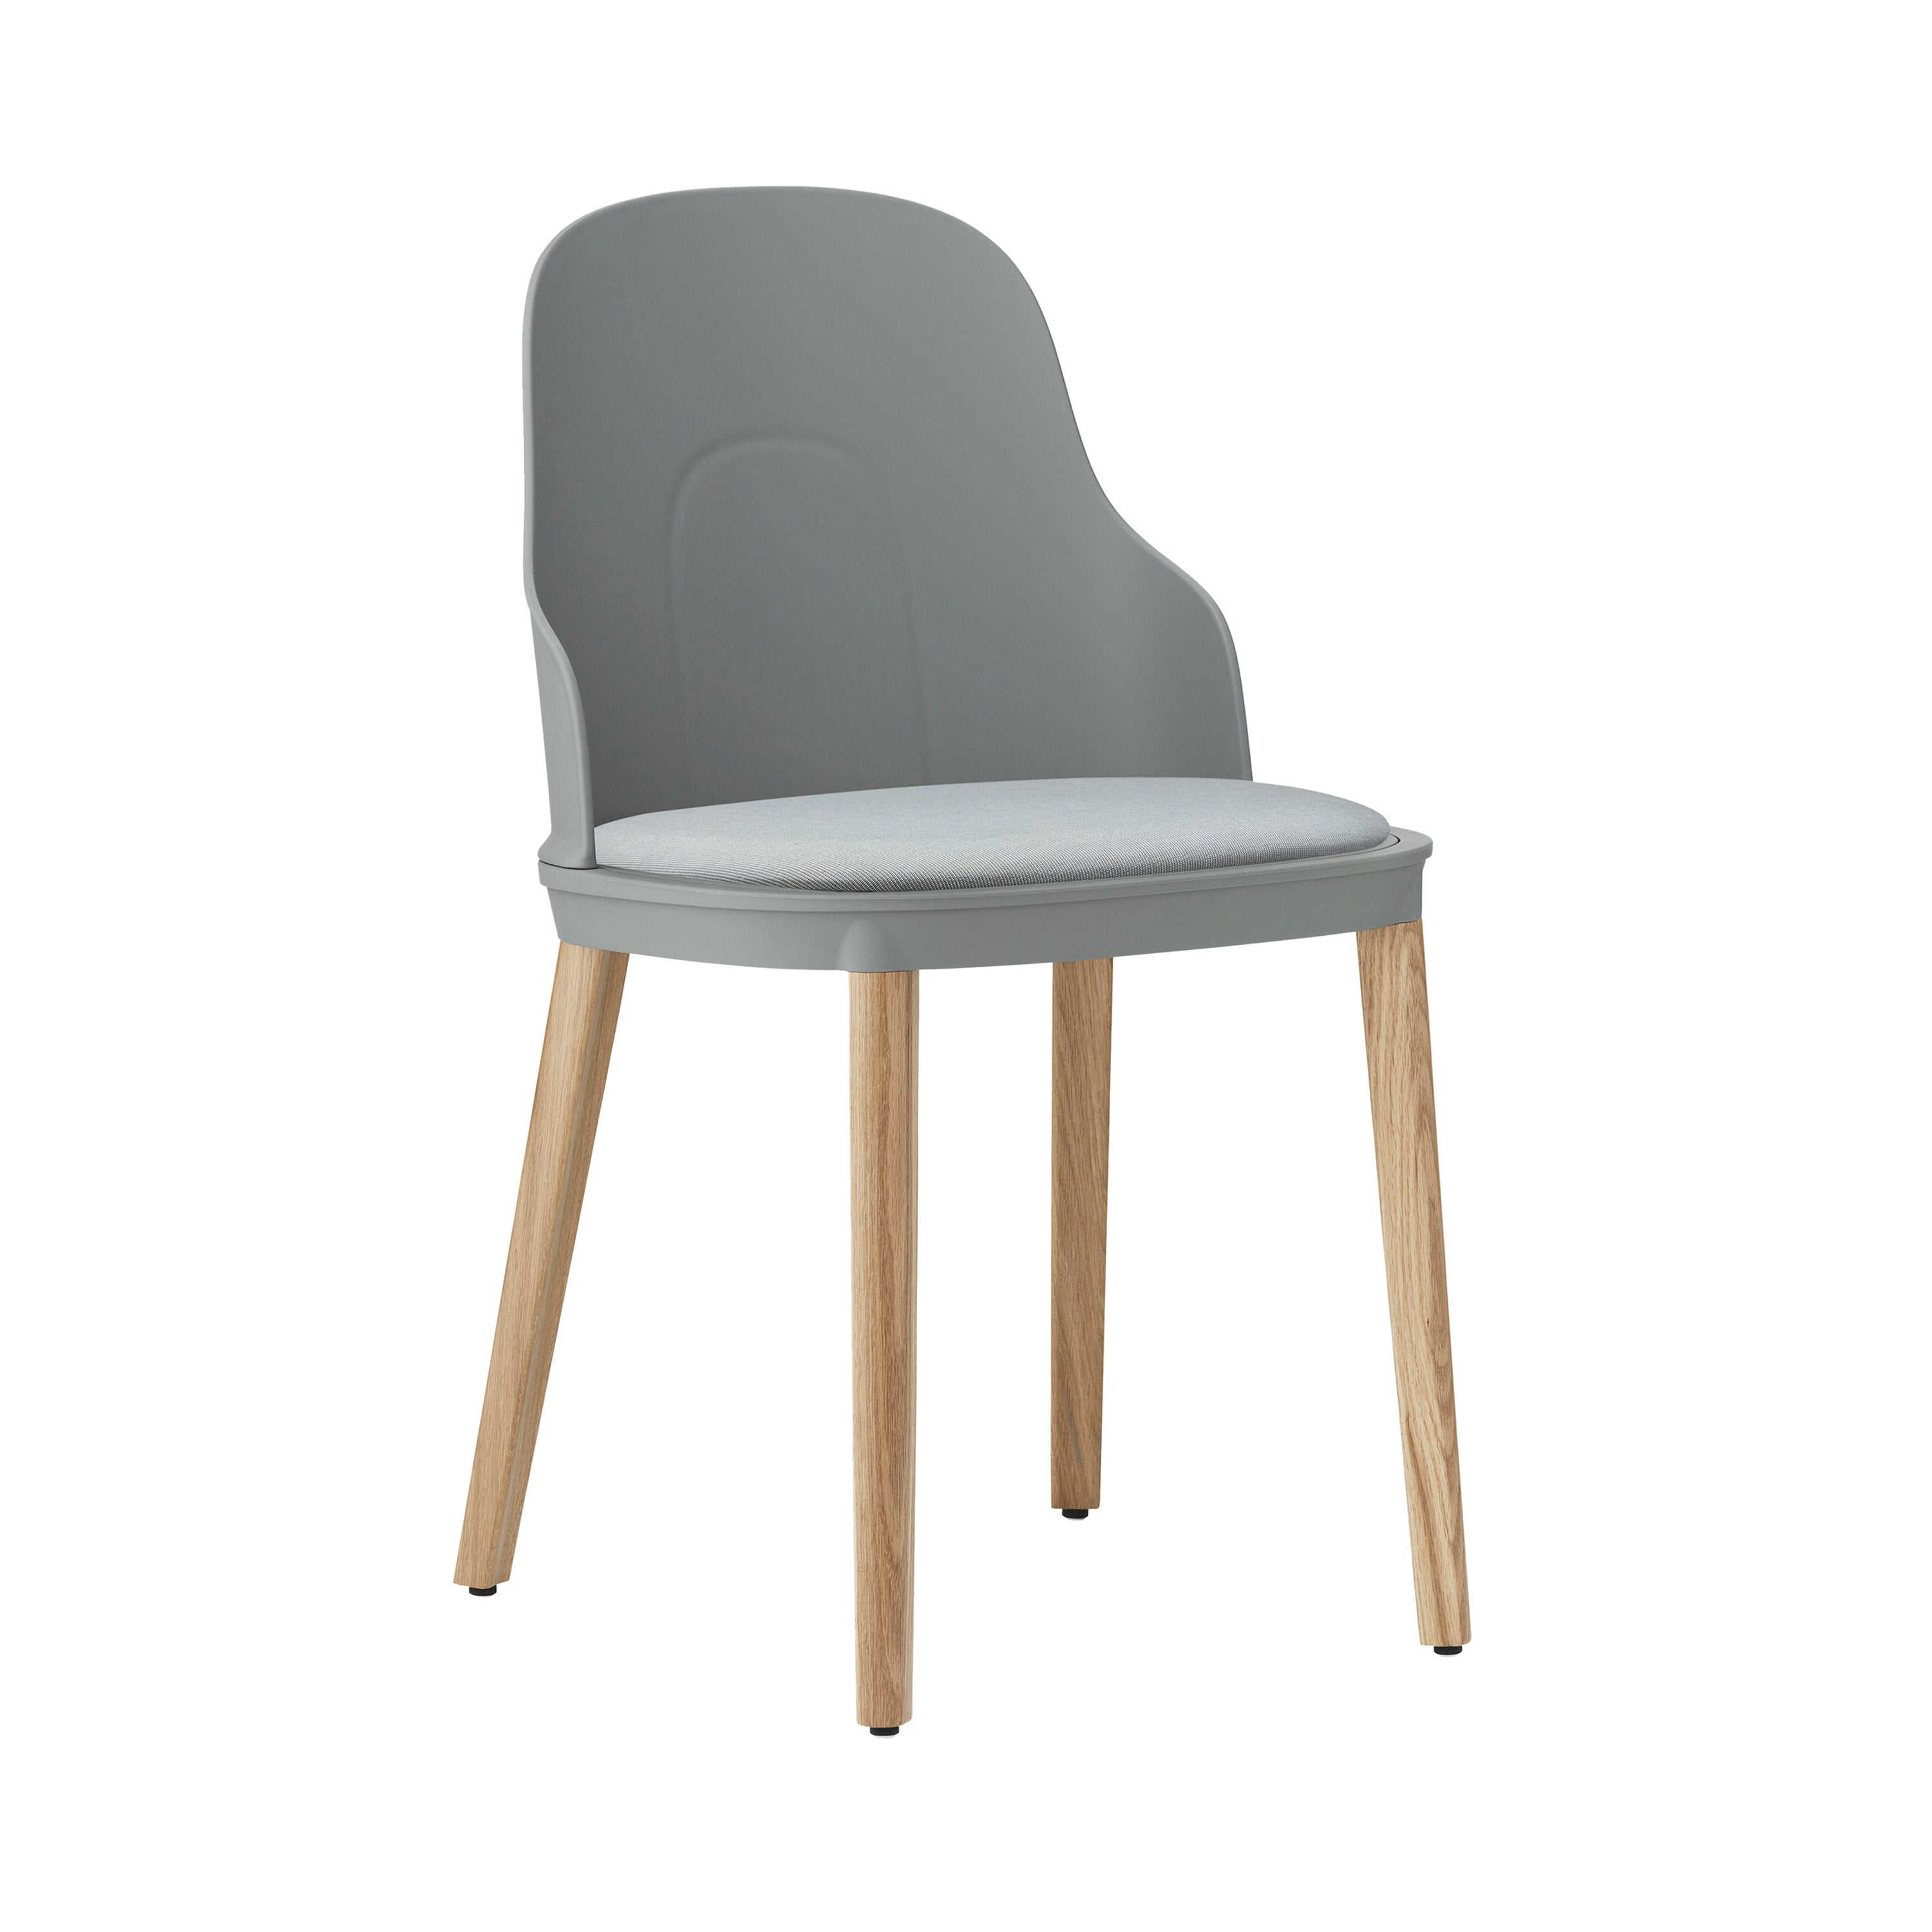 Allez Chair: Upholstered + Grey + Oak